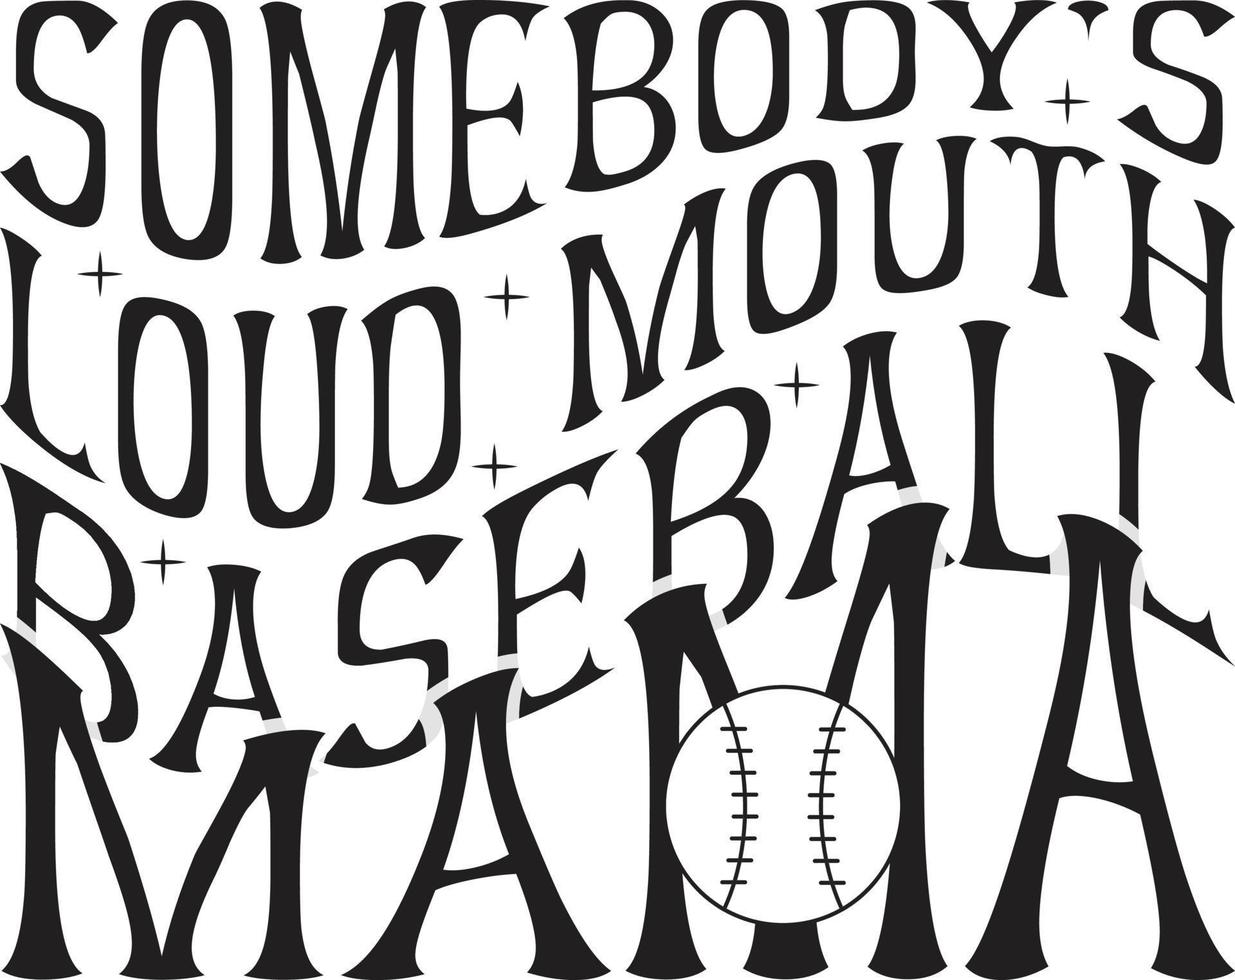 Somebody's loud mouth Baseball mama Graphic t-shirt vector